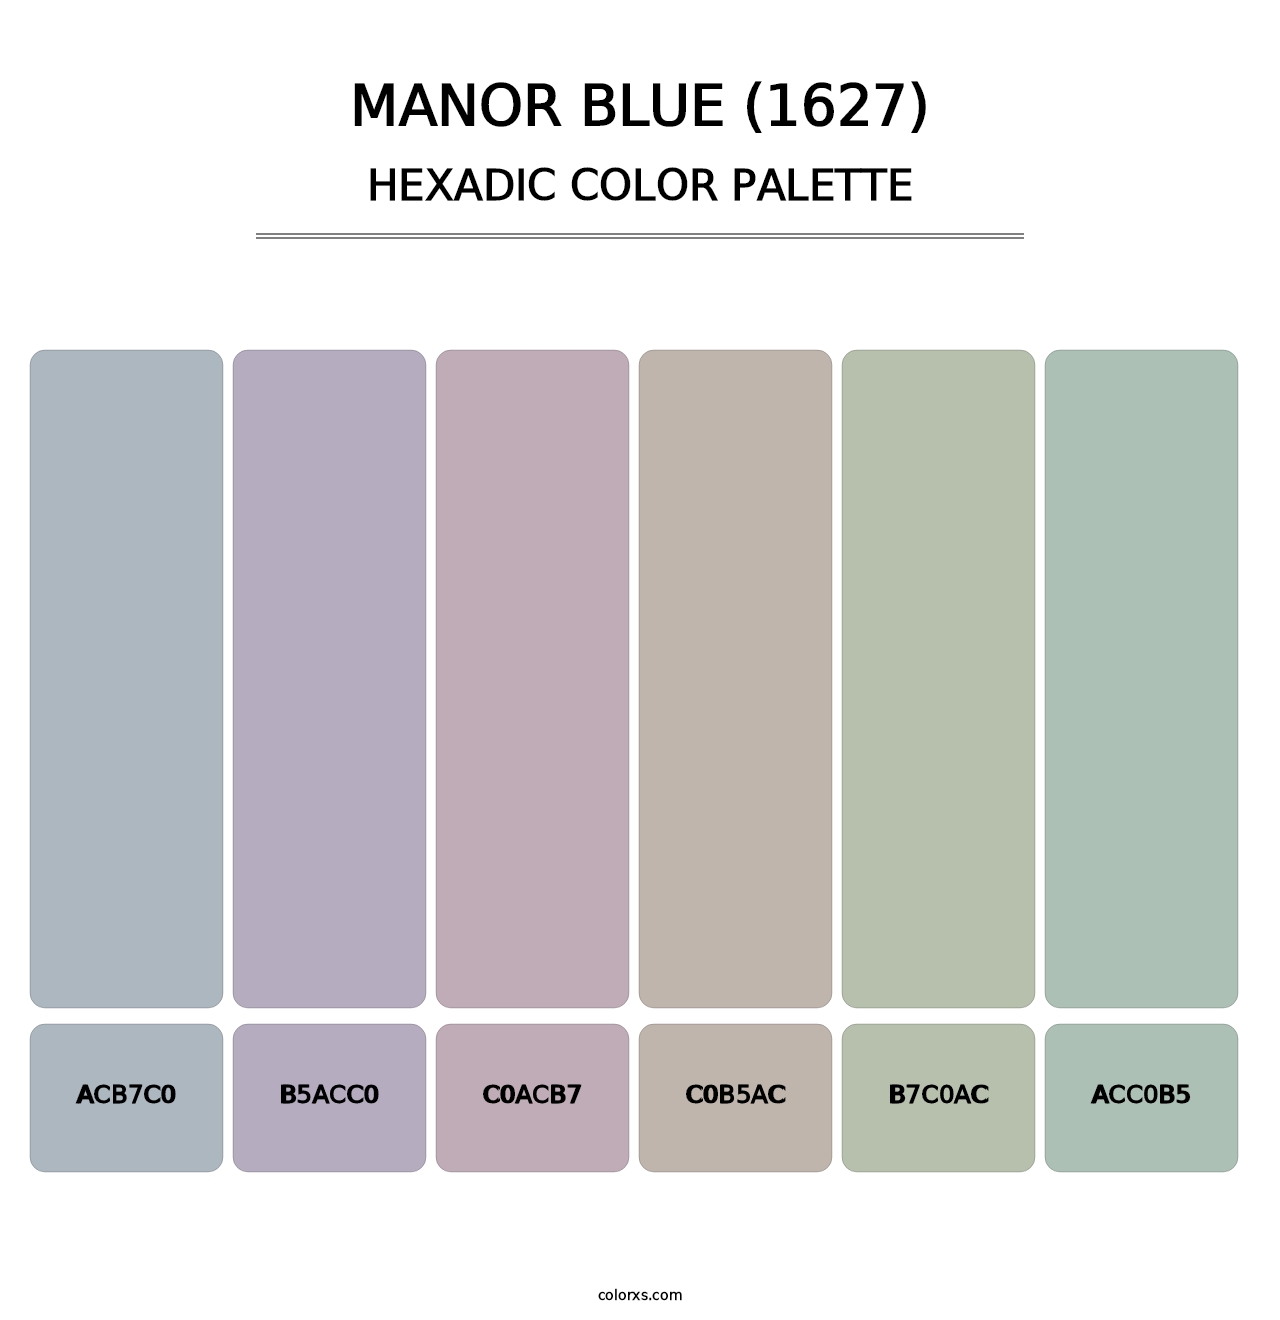 Manor Blue (1627) - Hexadic Color Palette